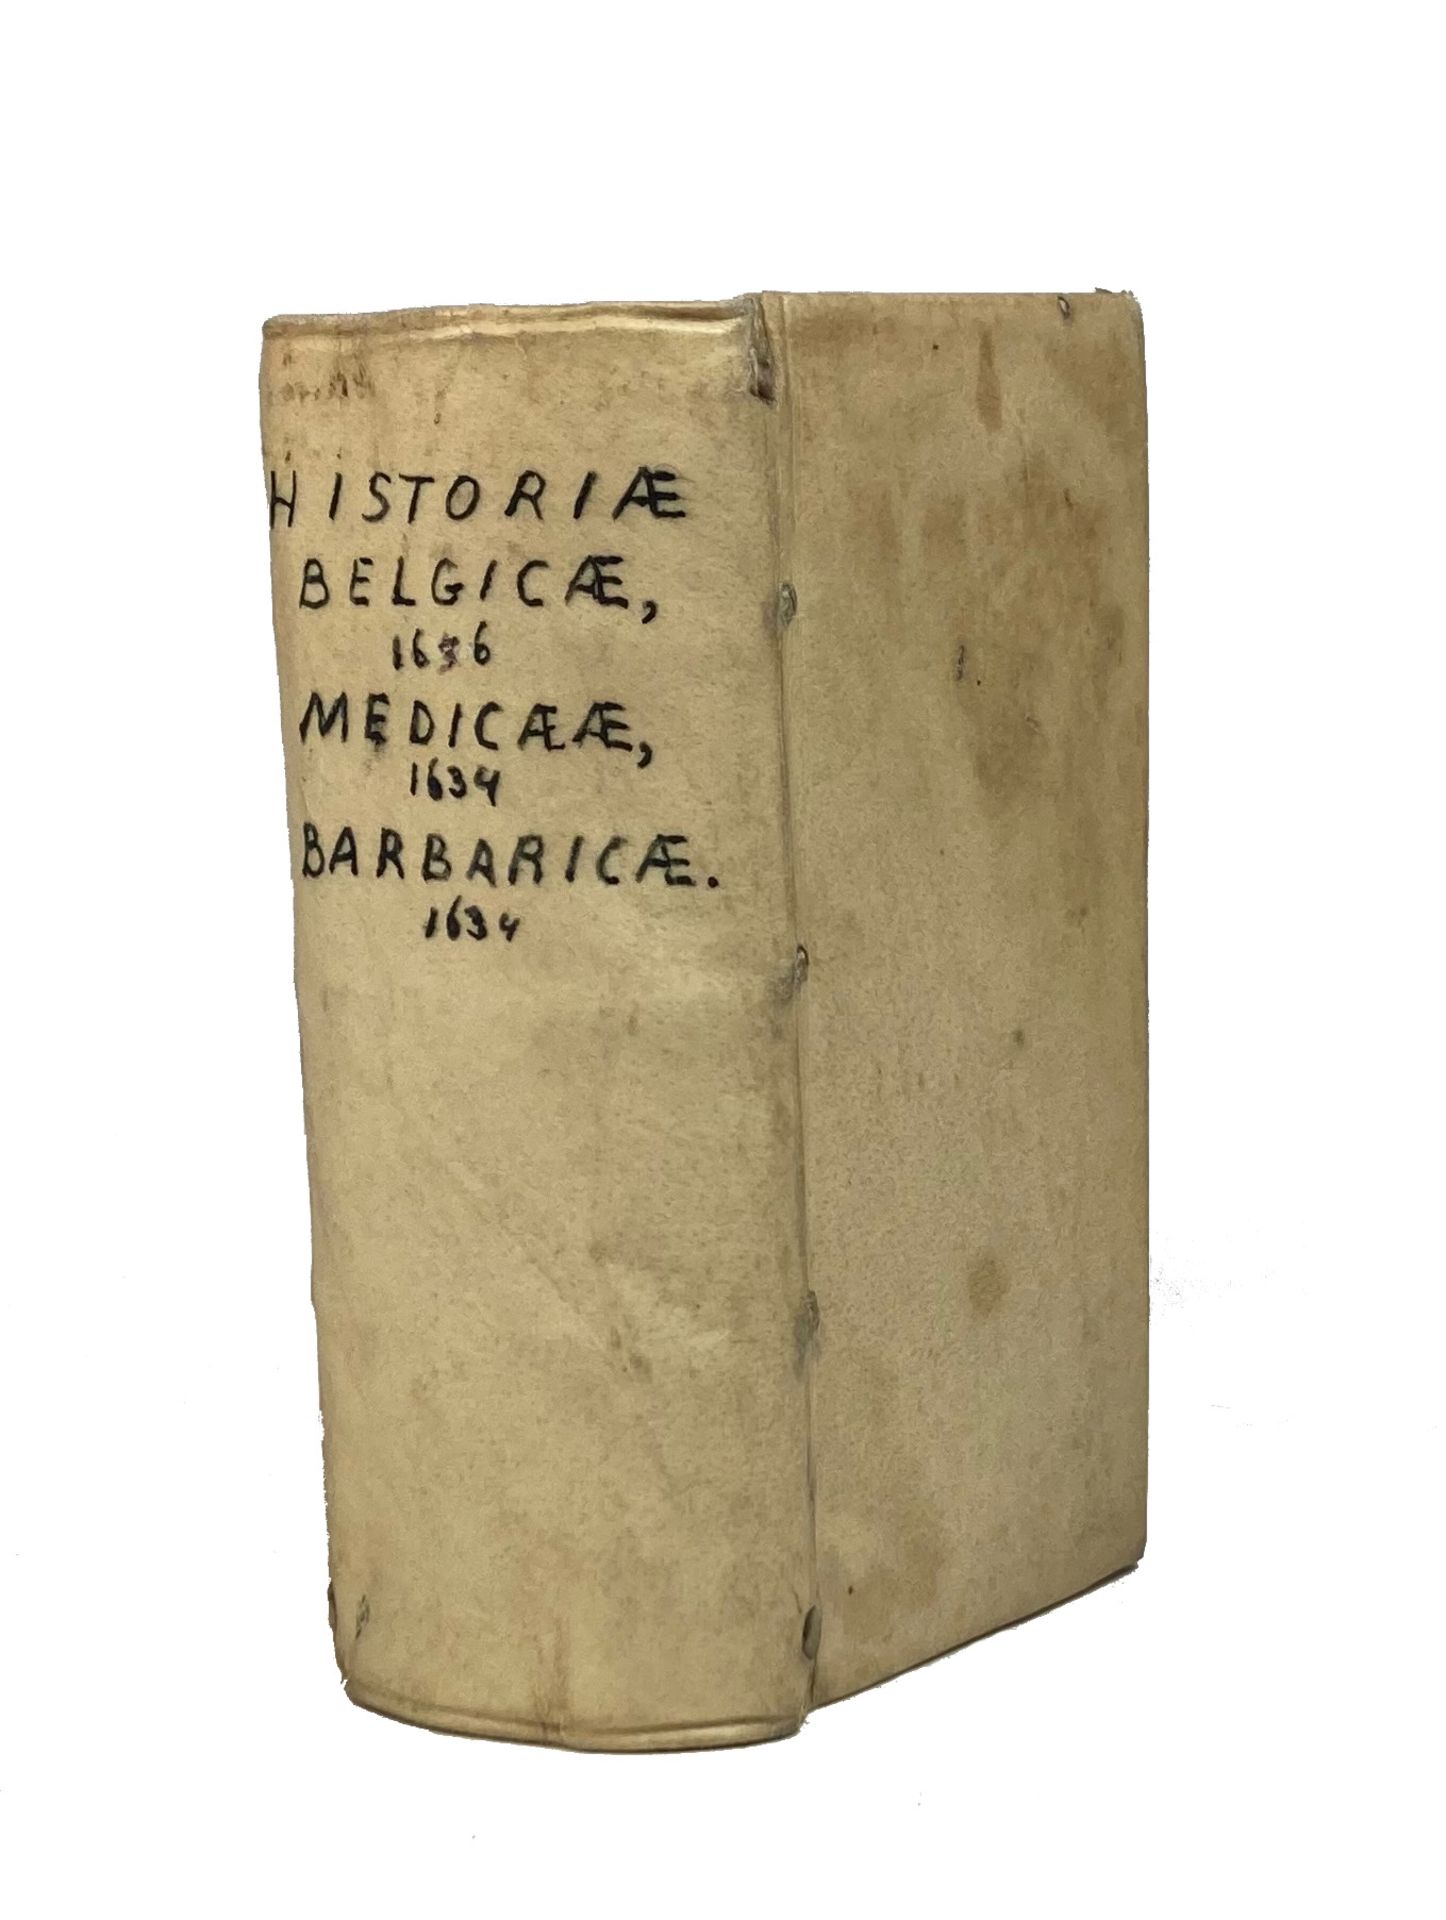 PUTEANUS, E. Historiae Belgicae liber singularis, de obsidione Lovaniensis anno MDCXXXV. Antw